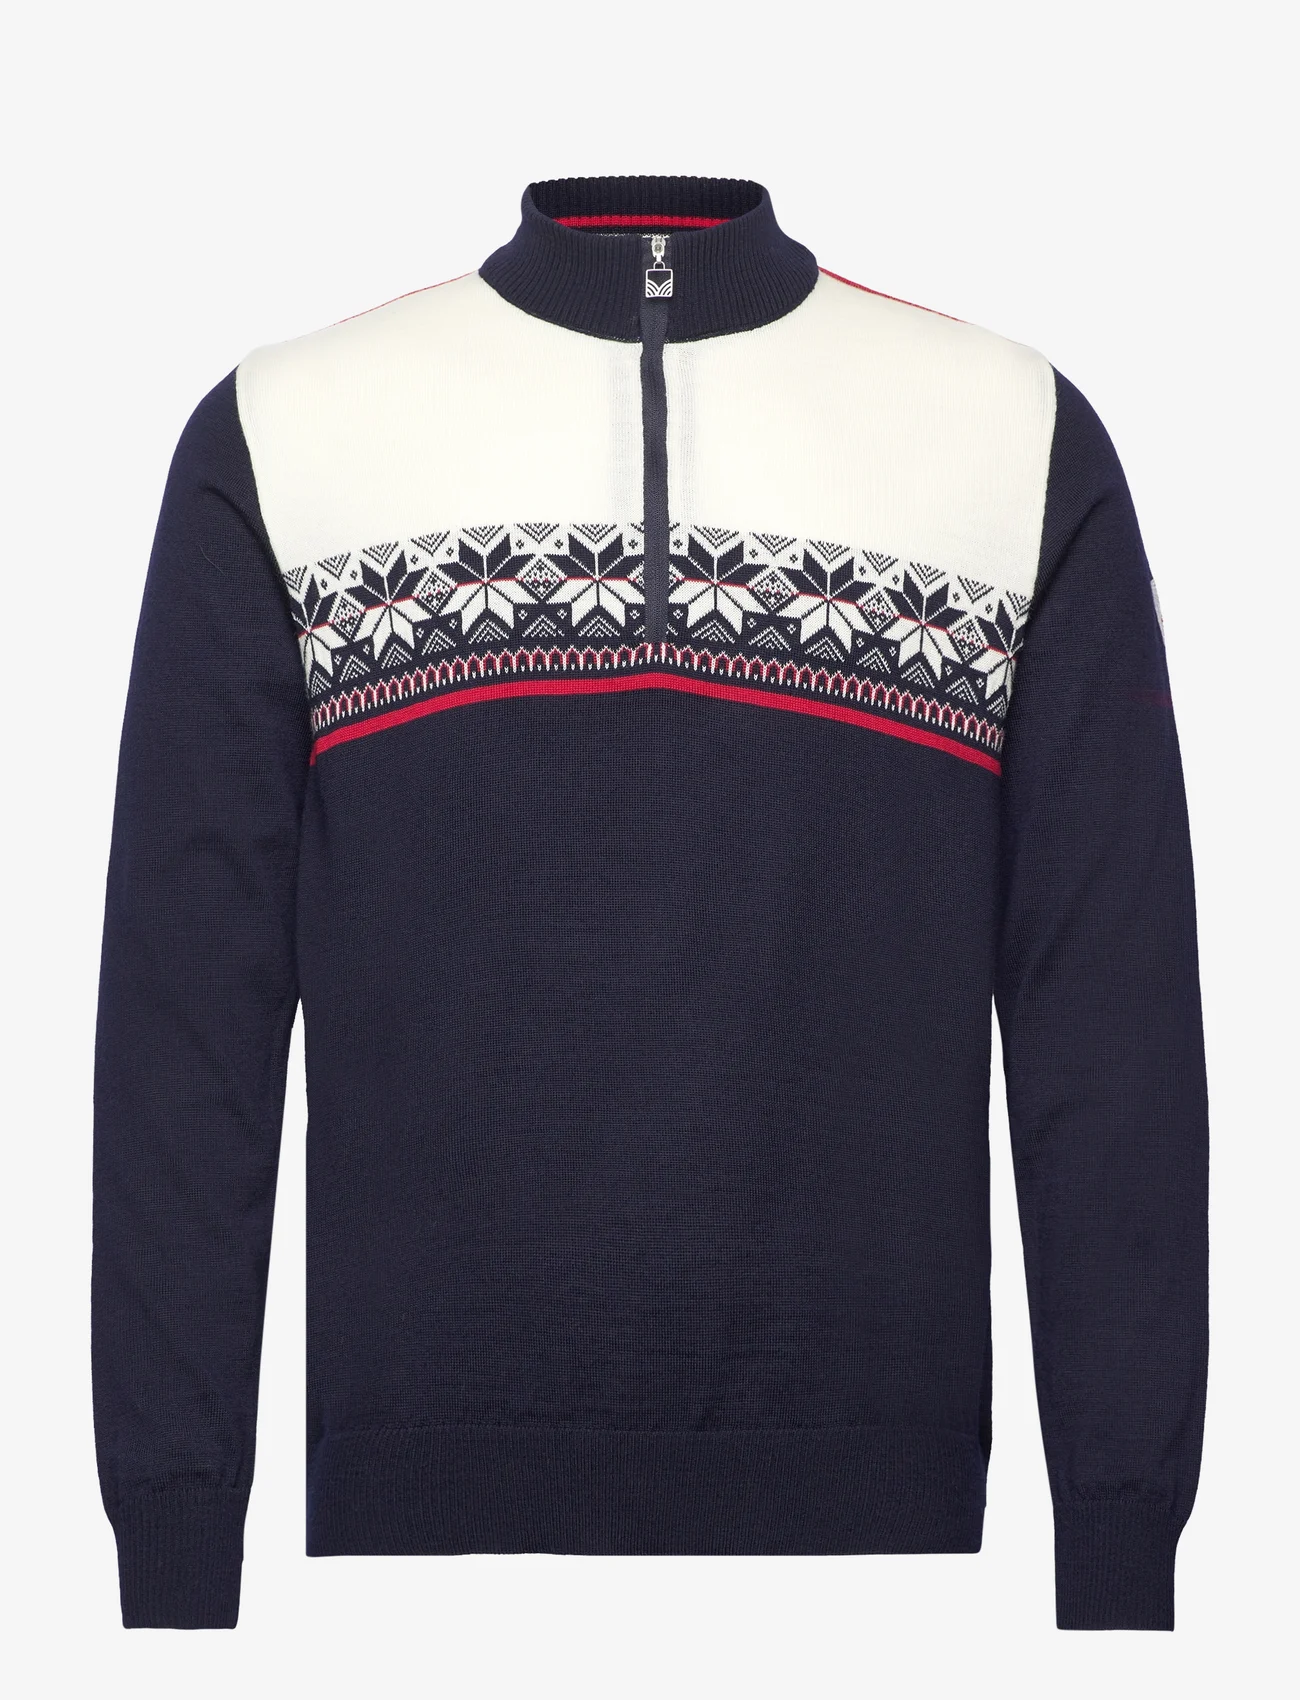 Dale of Norway - Liberg Masc Sweater - sweatshirts - c00 - 0